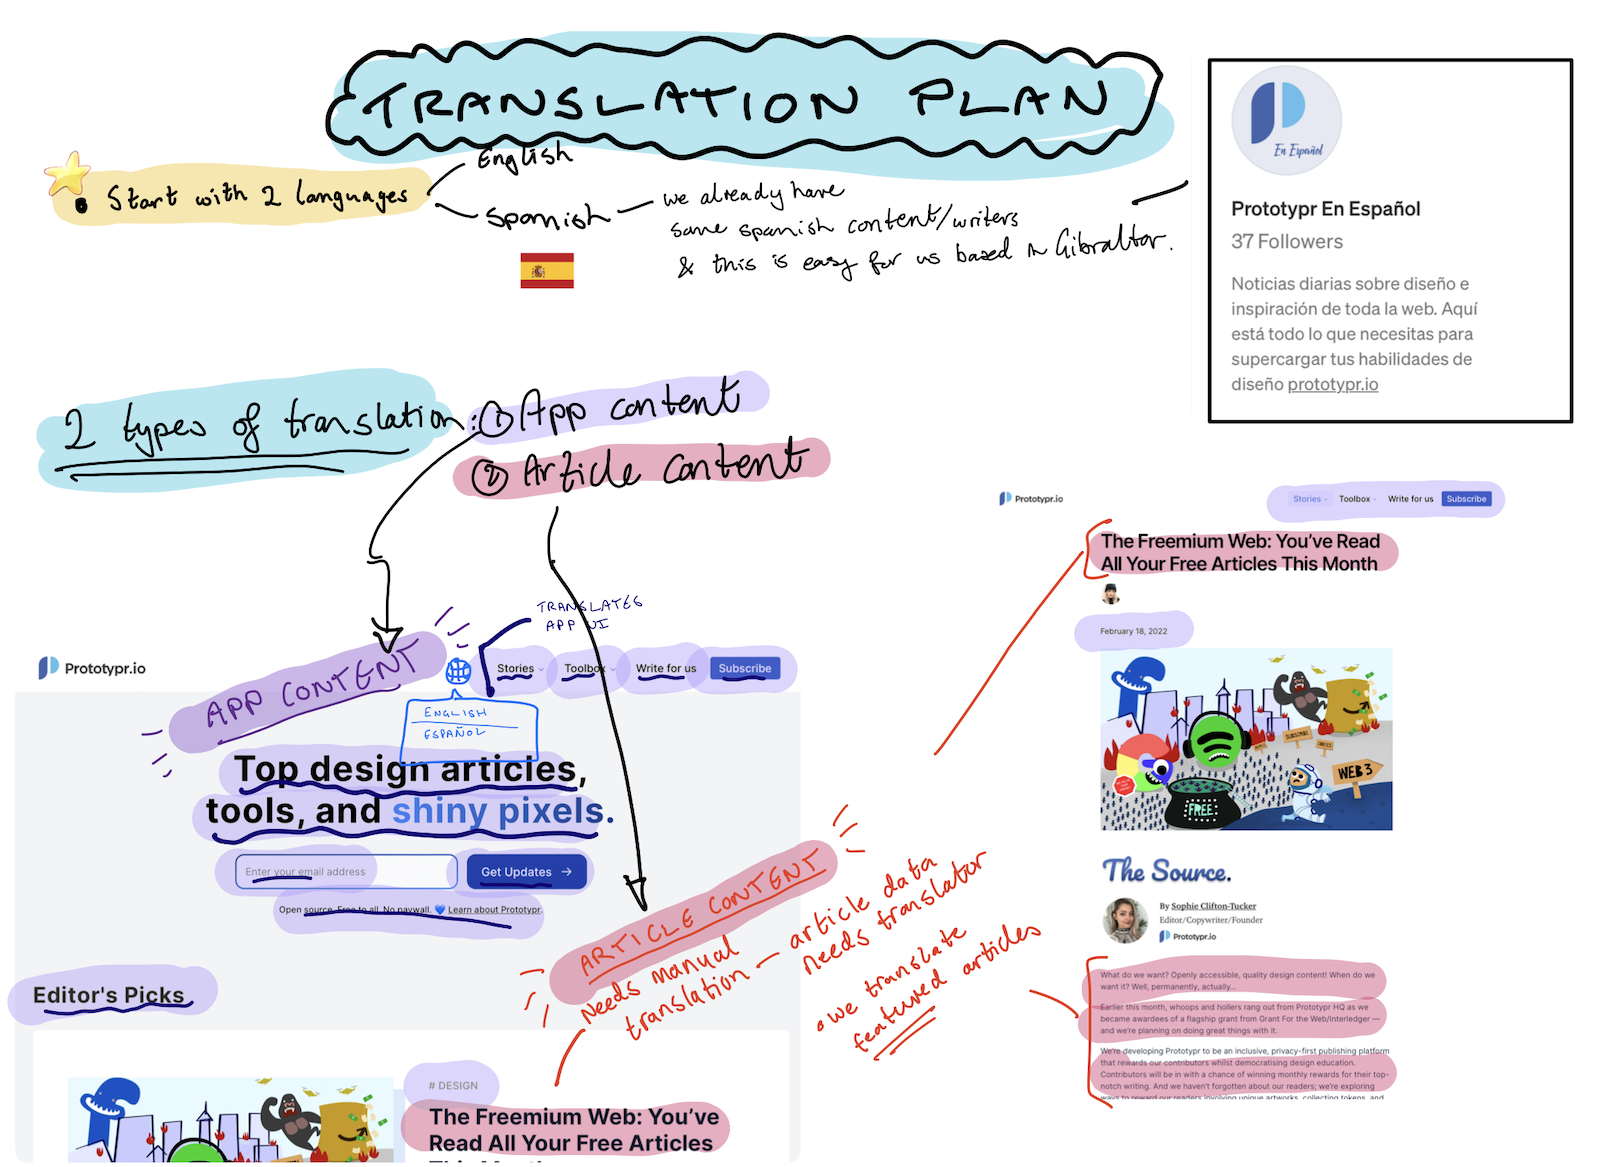 Translation plan sketch notes